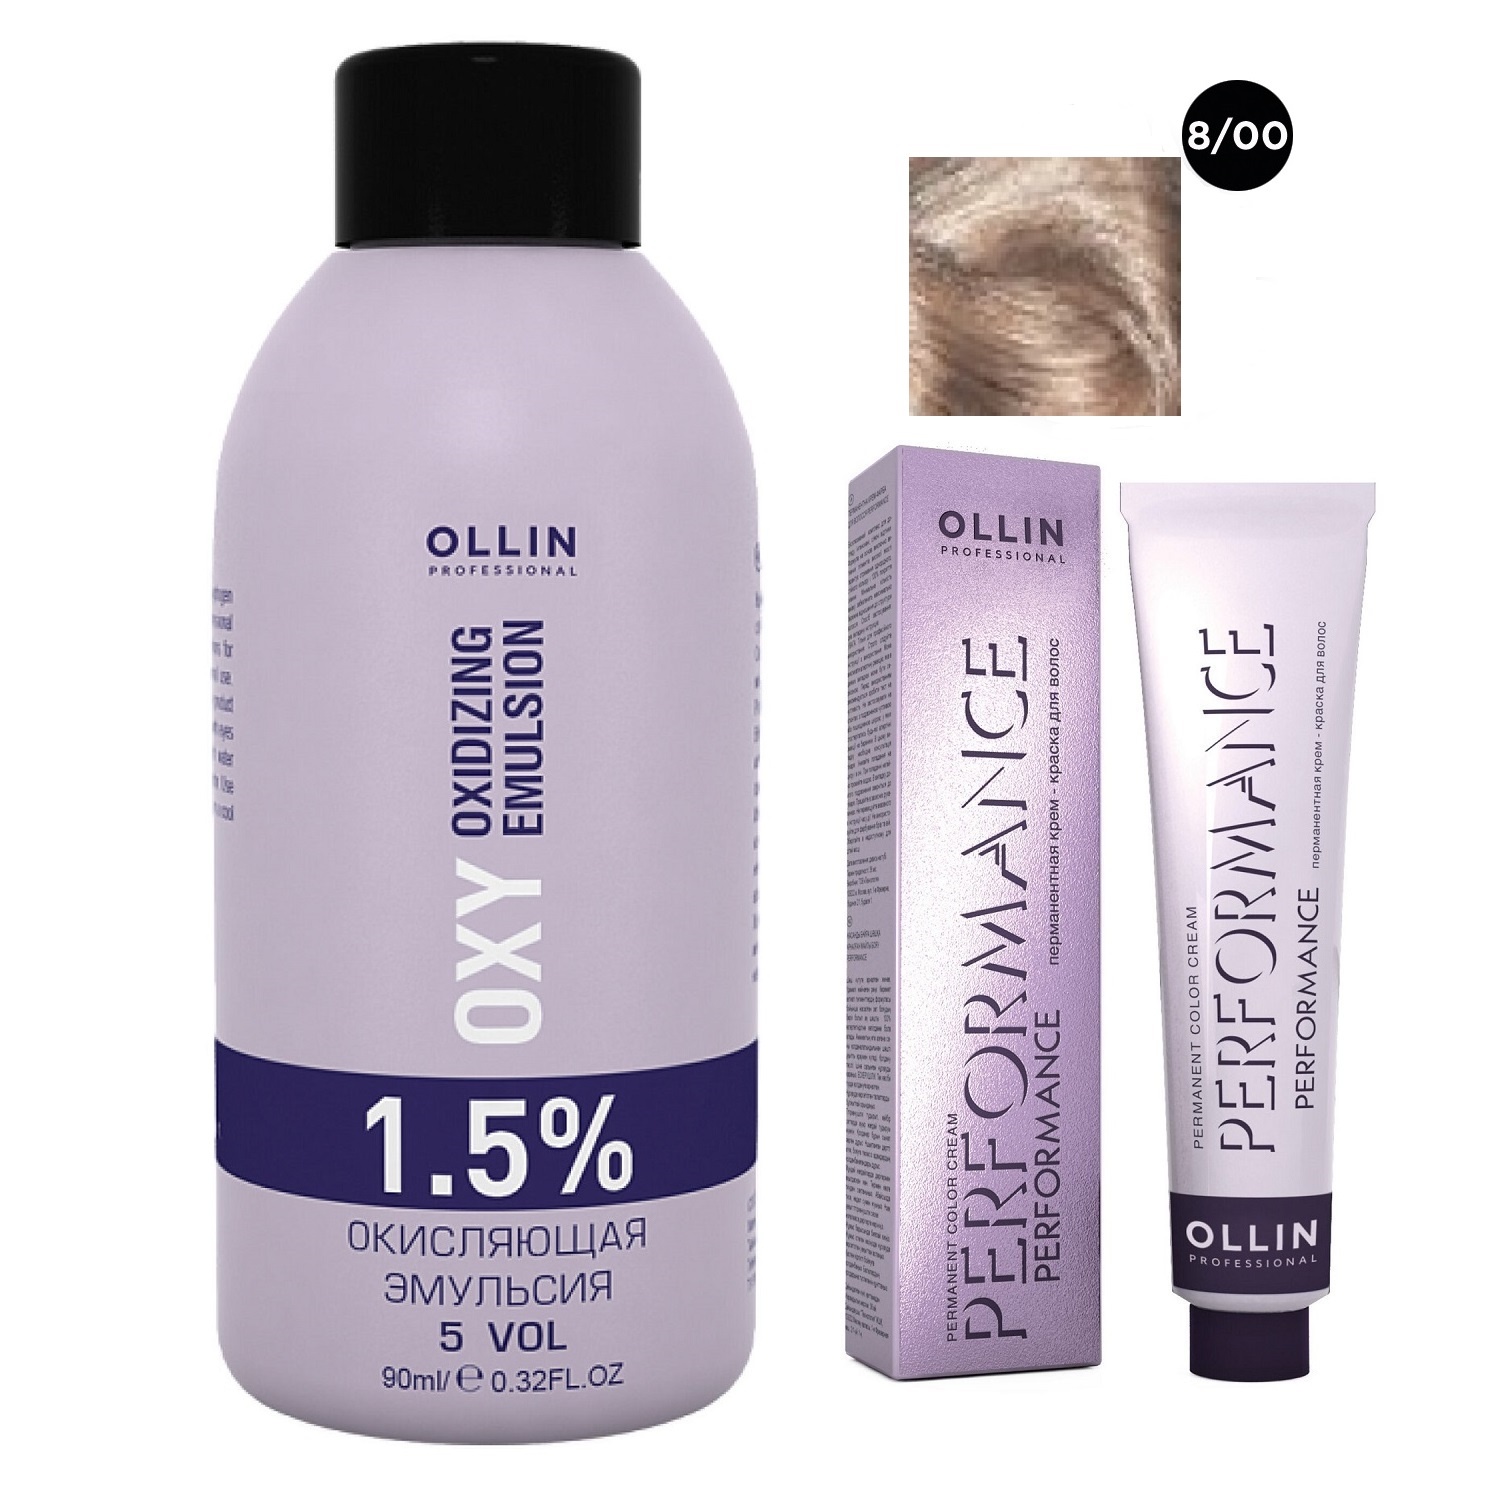 Ollin Professional Набор Перманентная крем-краска для волос Ollin Performance оттенок 8/00 светло-русый глубокий 60 мл + Окисляющая эмульсия Oxy 1,5% 90 мл (Ollin Professional, Performance)